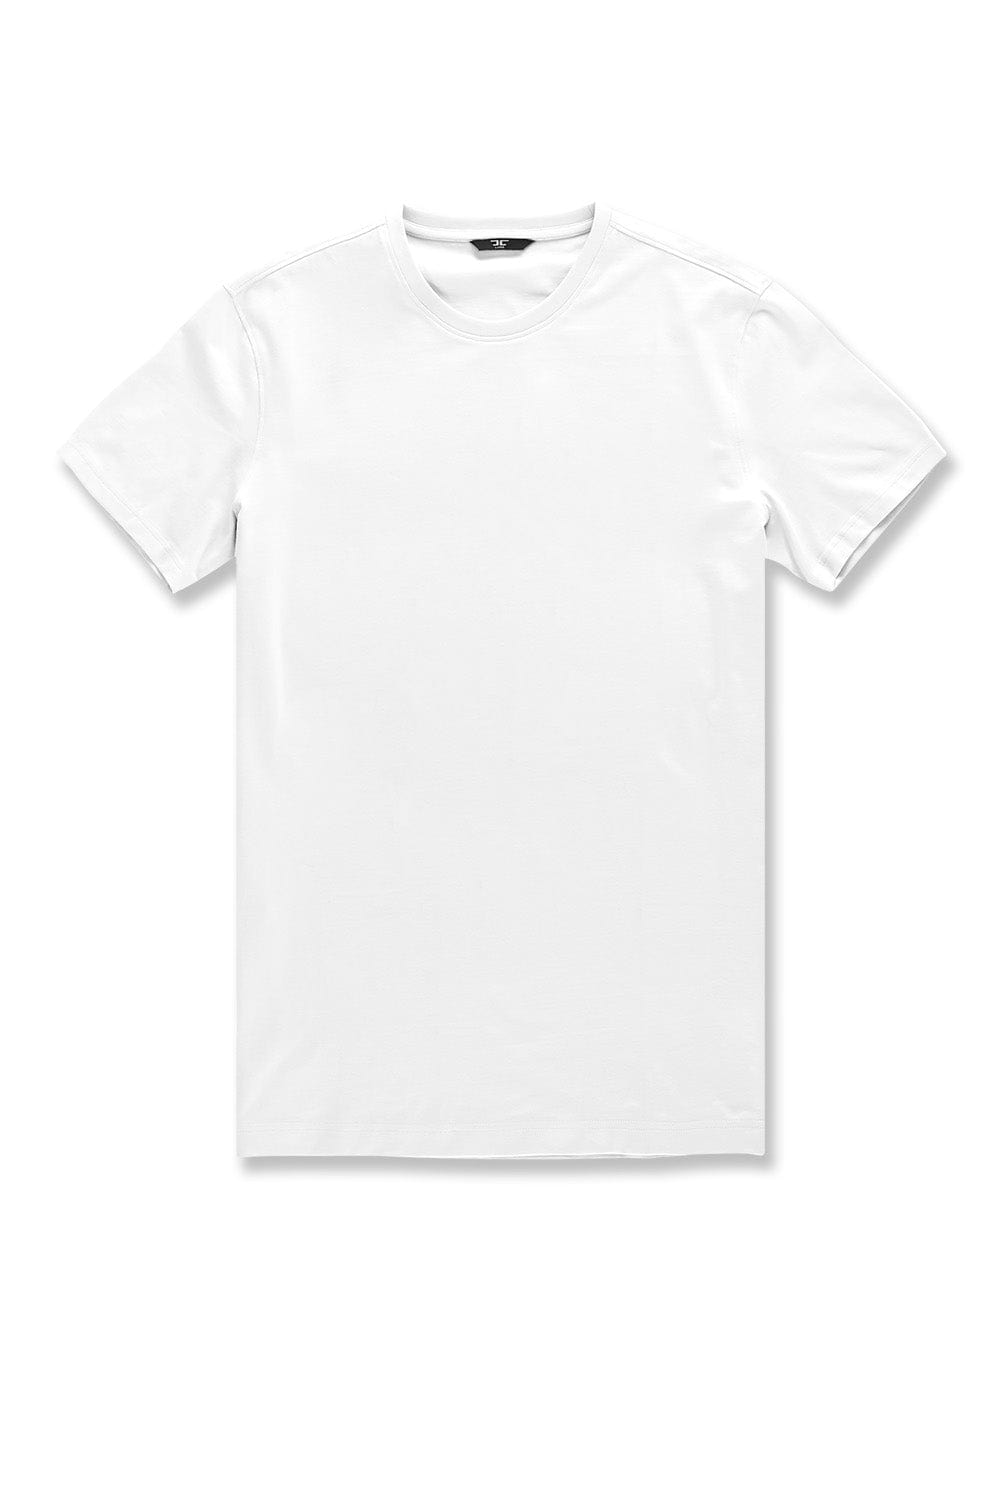 JC Big Men Big Men's Premium Crewneck T-Shirt (White) 4XL / White / CAB12